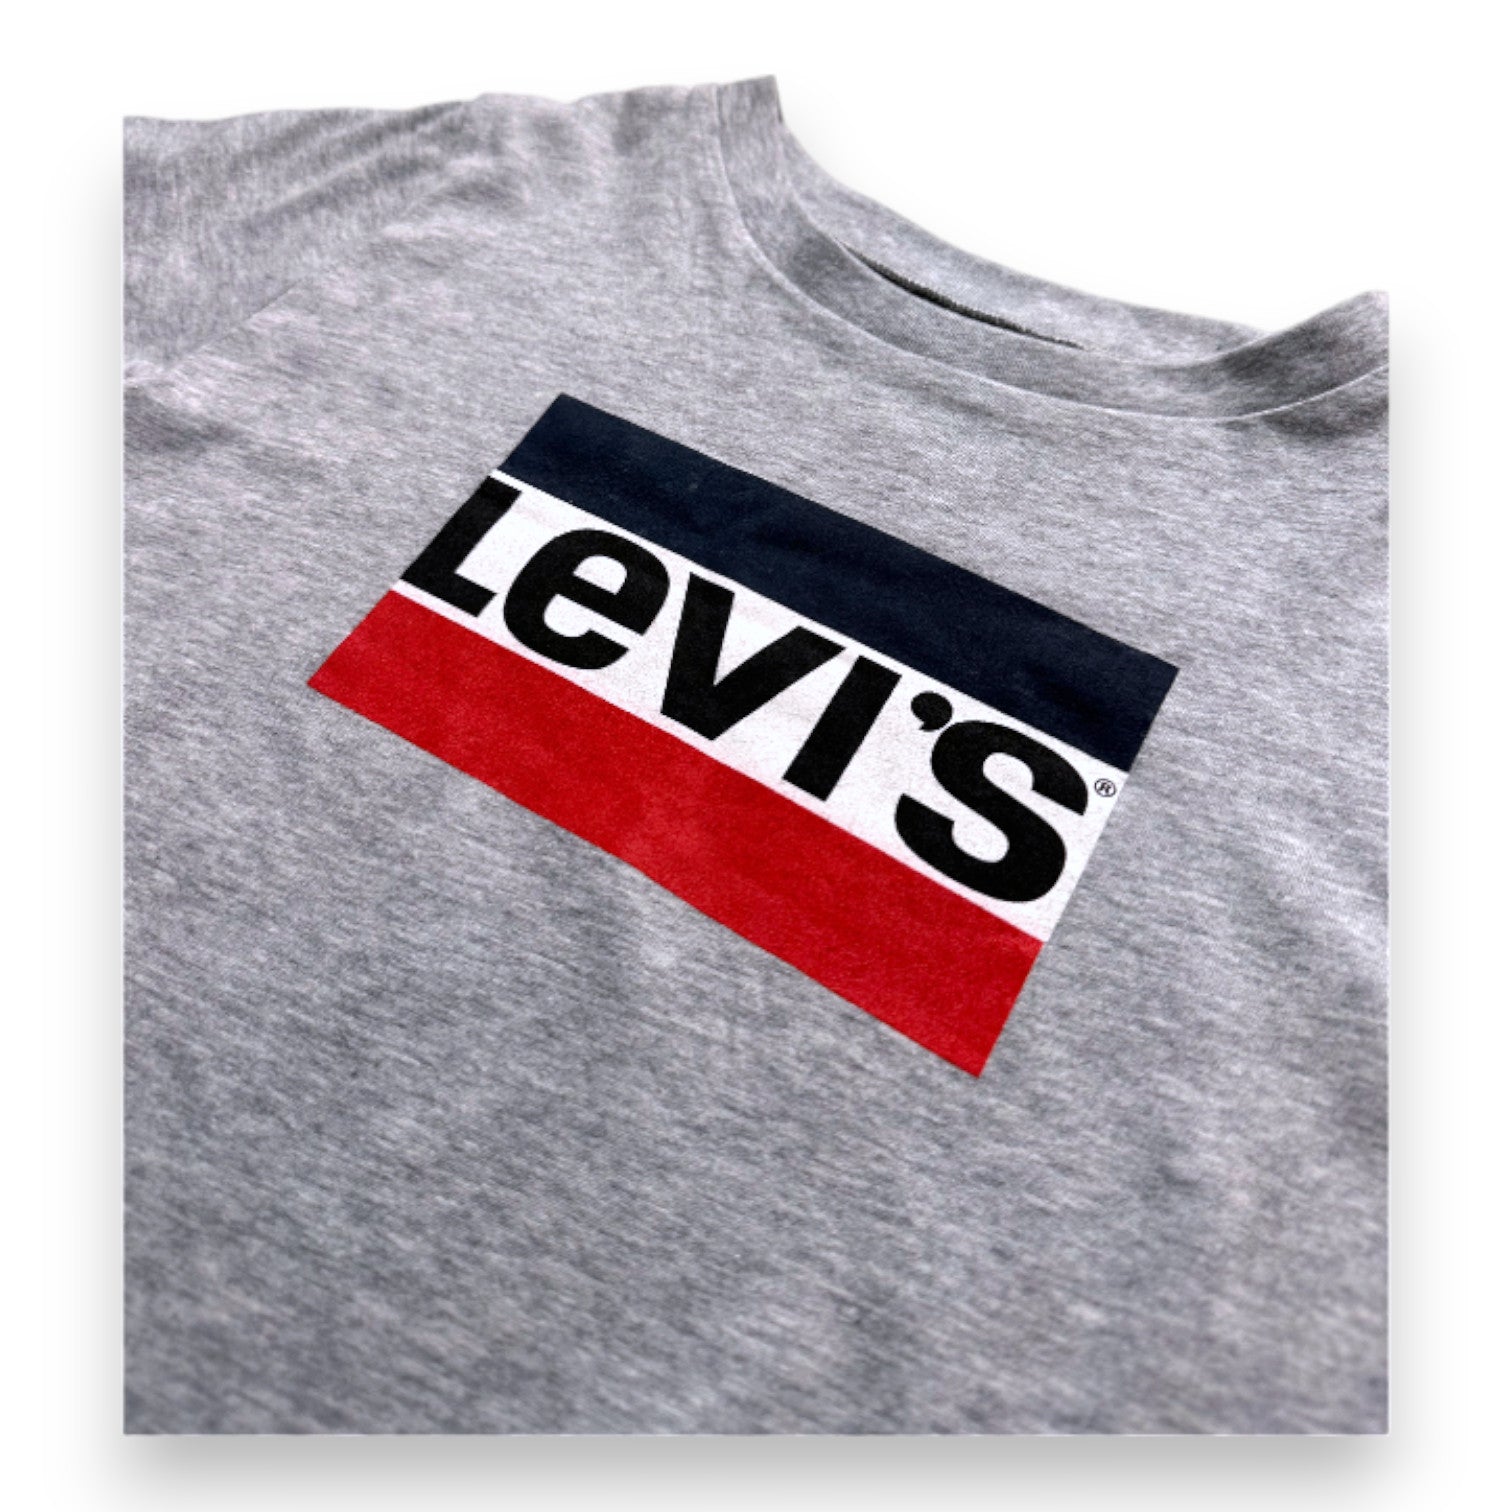 LEVI'S - Robe t-shirt grise avec logo Levi's - 8 ans